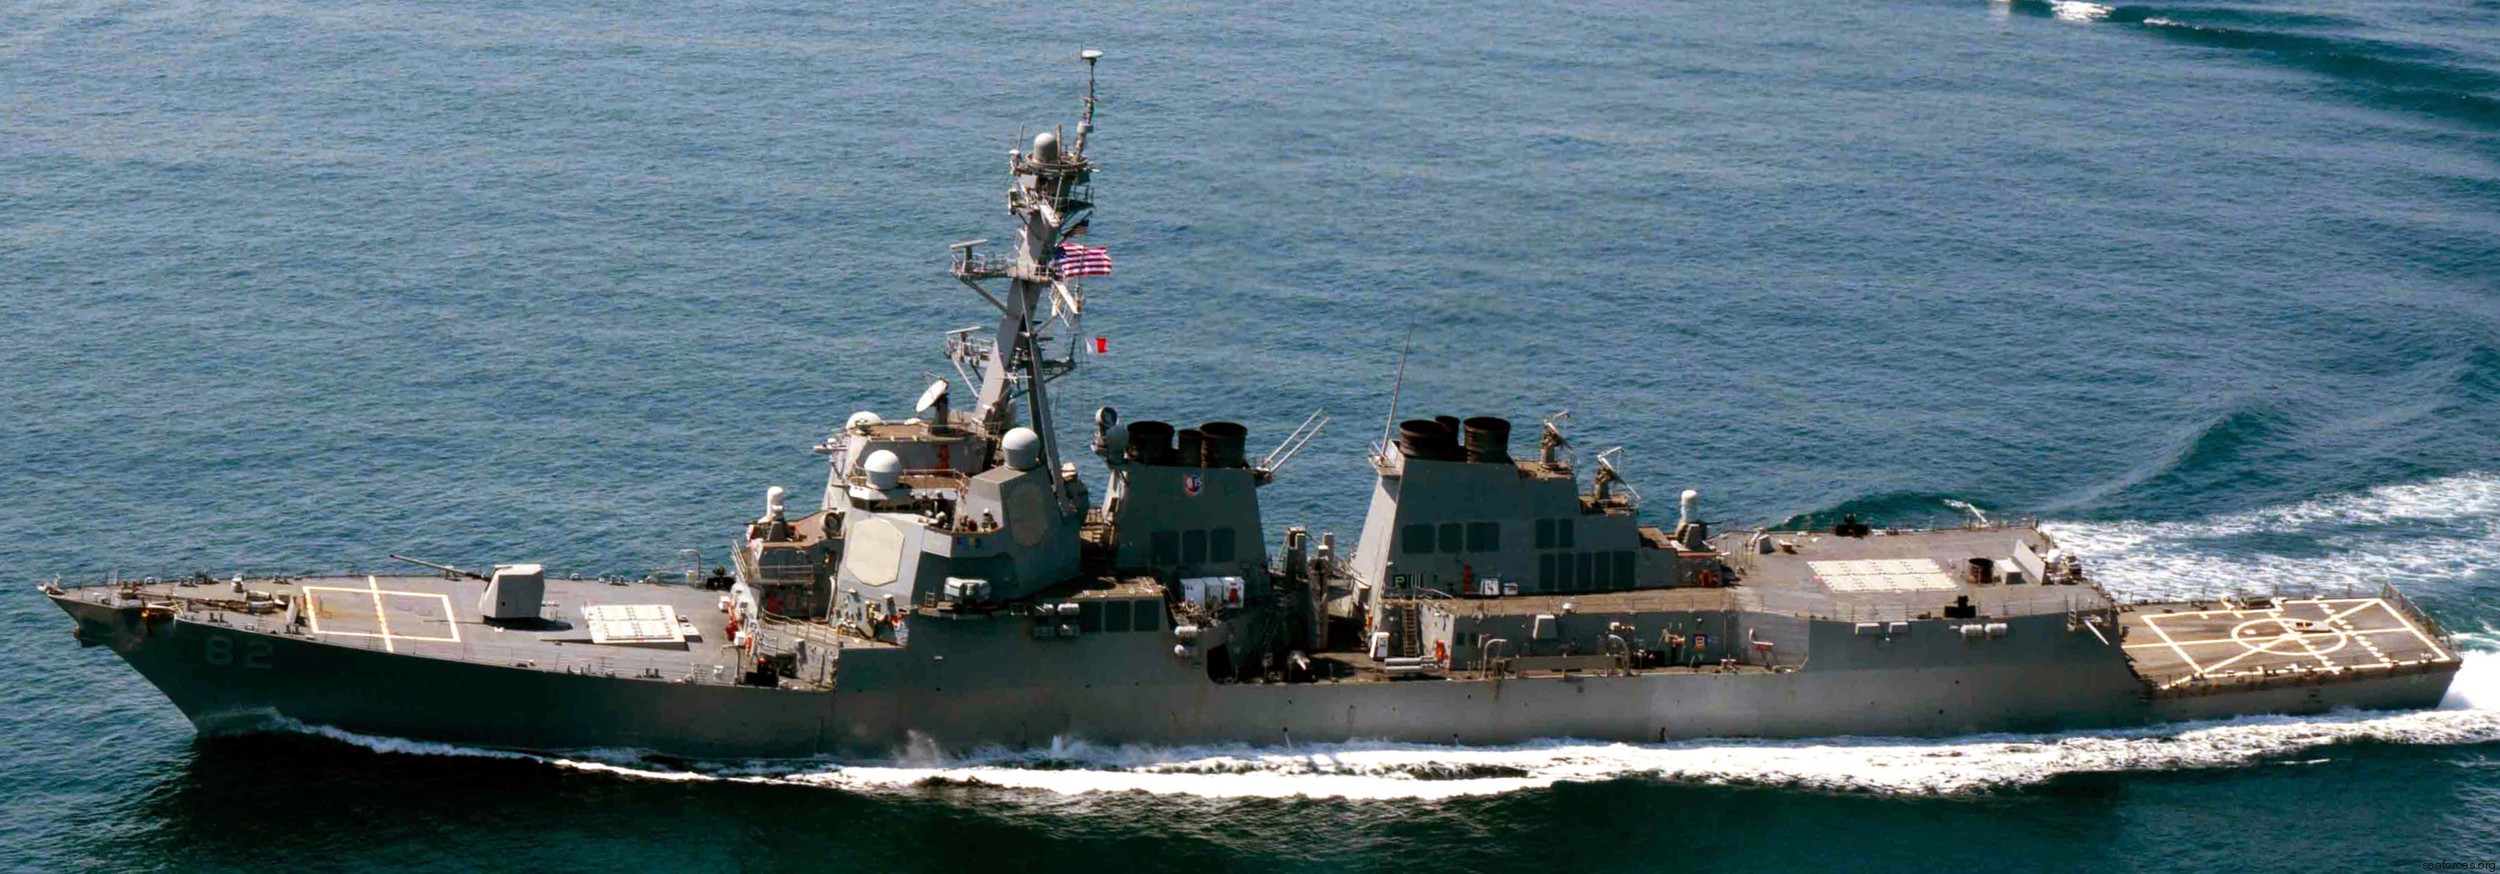 ddg-82 uss lassen arleigh burke class guided missile destroyer aegis 39 off korea